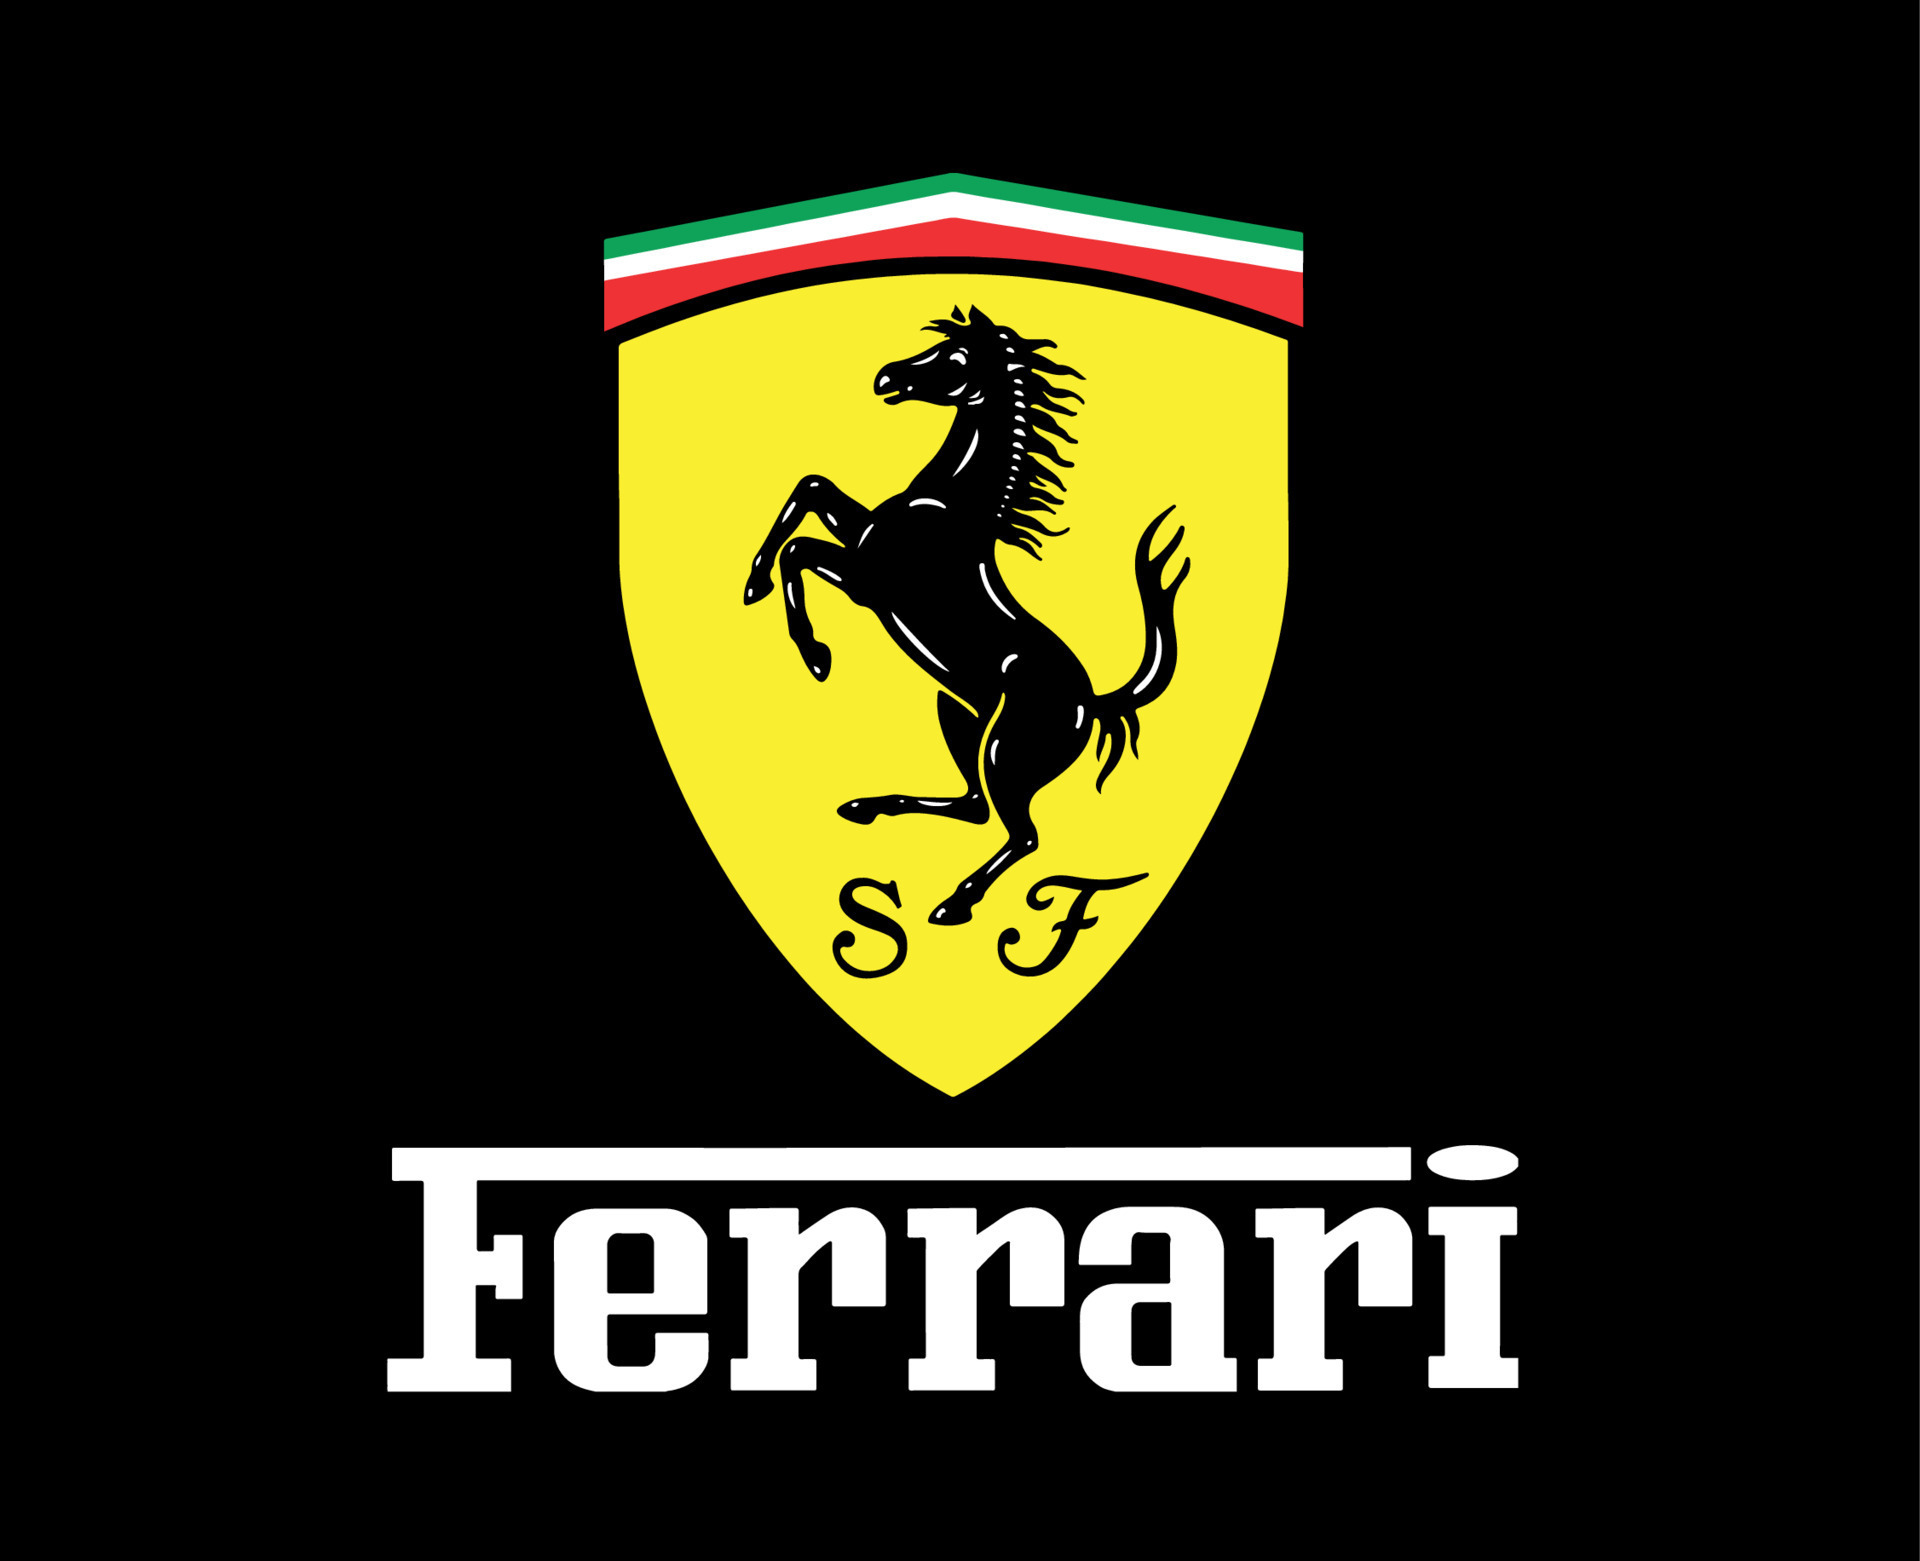 Ferrari Logo Brand Car Symbol With Name Design Italian Automobile ...